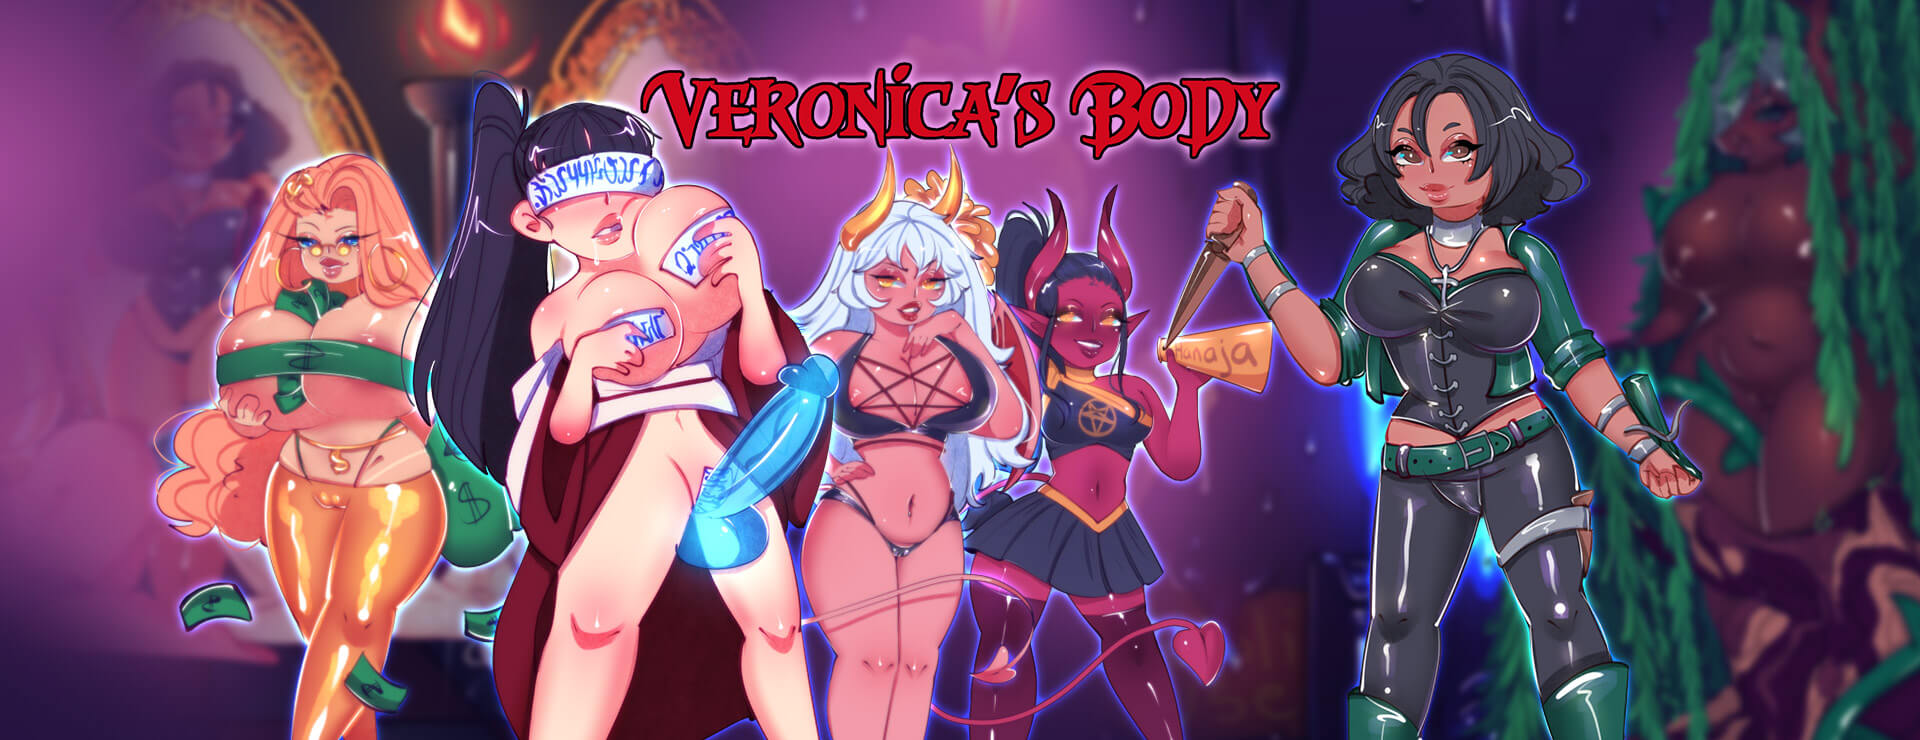 Veronica's Body - 角色扮演 遊戲